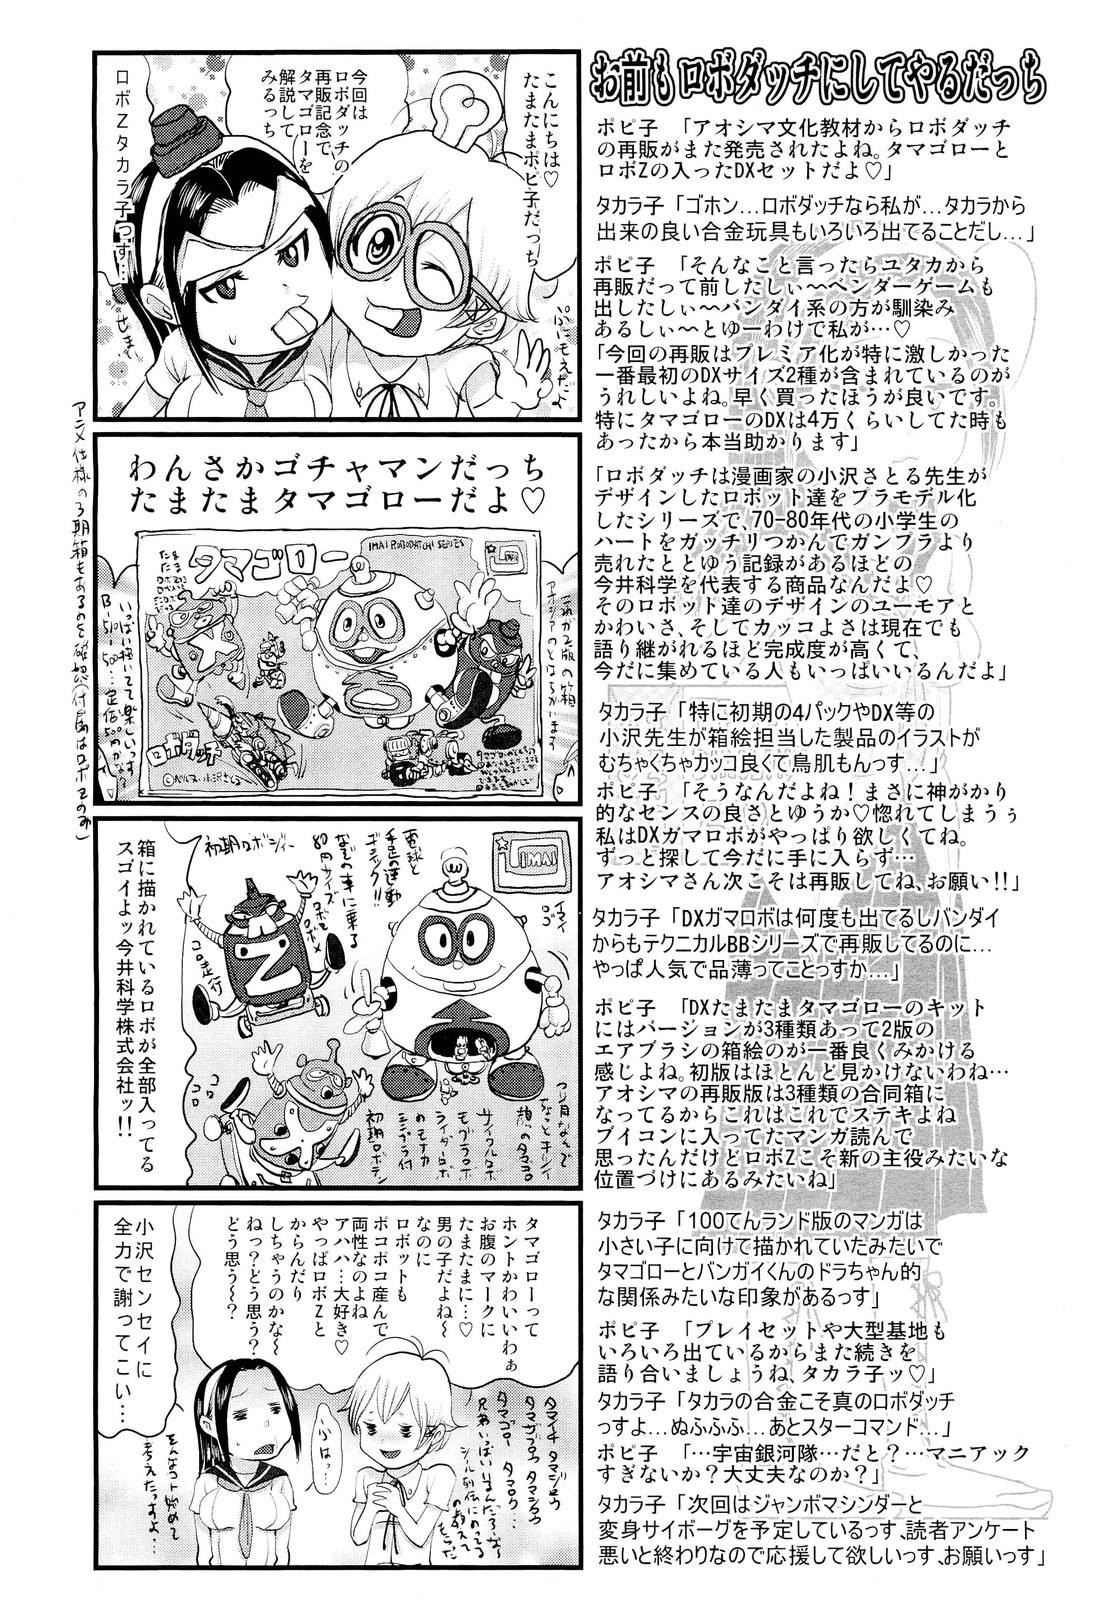 COMIC 舞姫無双 ACT.02 2012年11月号